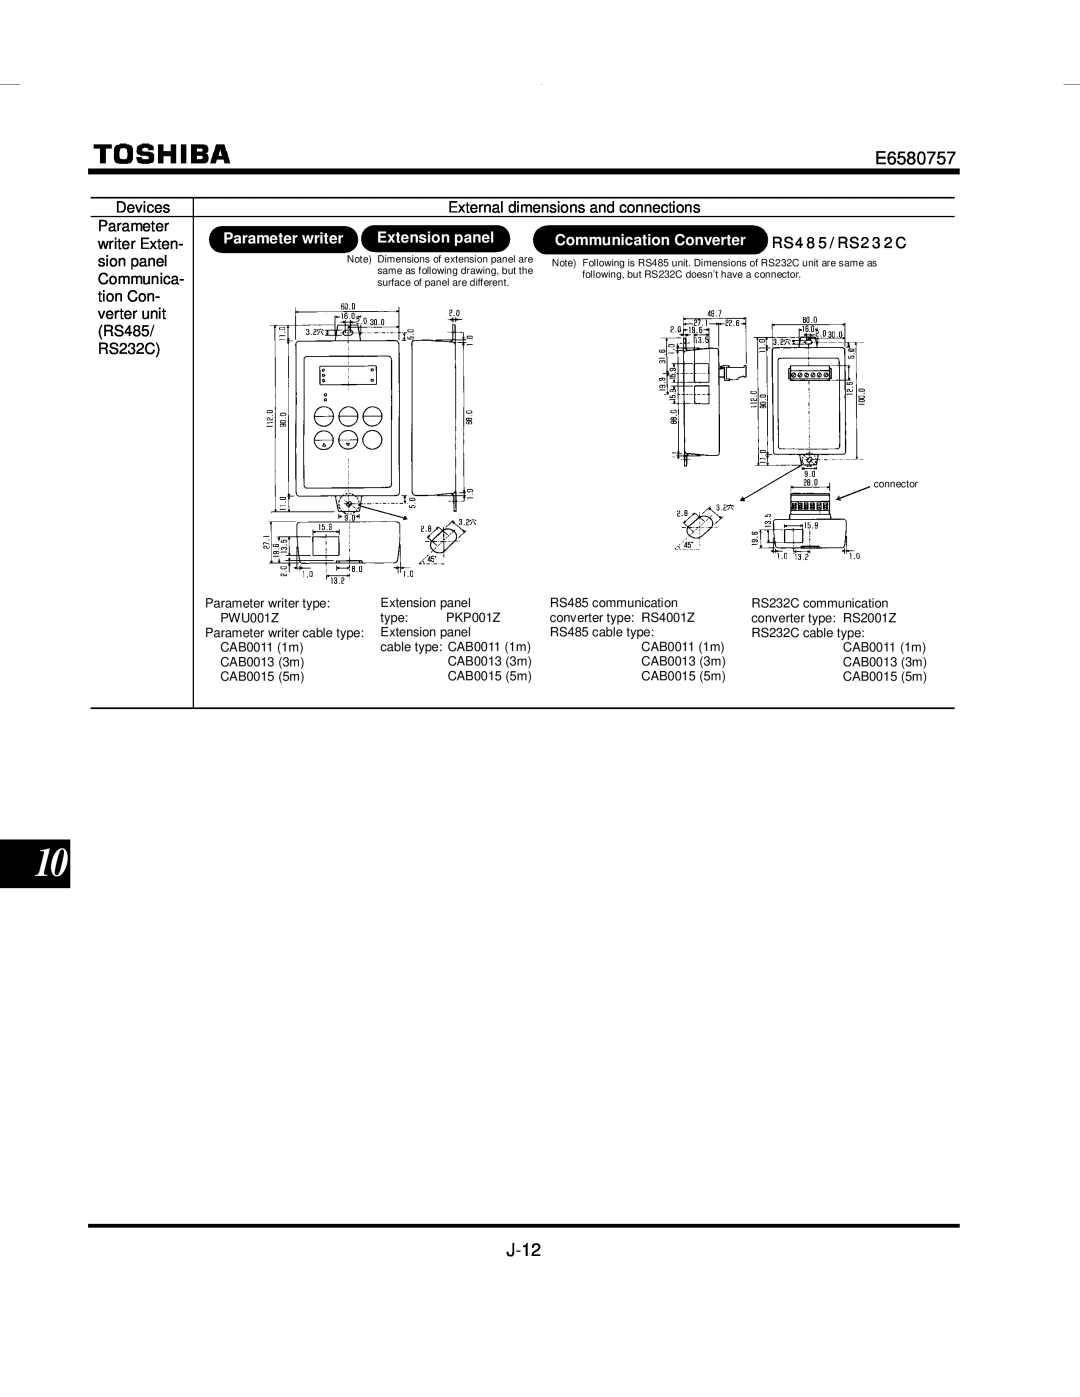 Toshiba VF-S9 manual Extension panel, Communication Converter, Parameter writer 